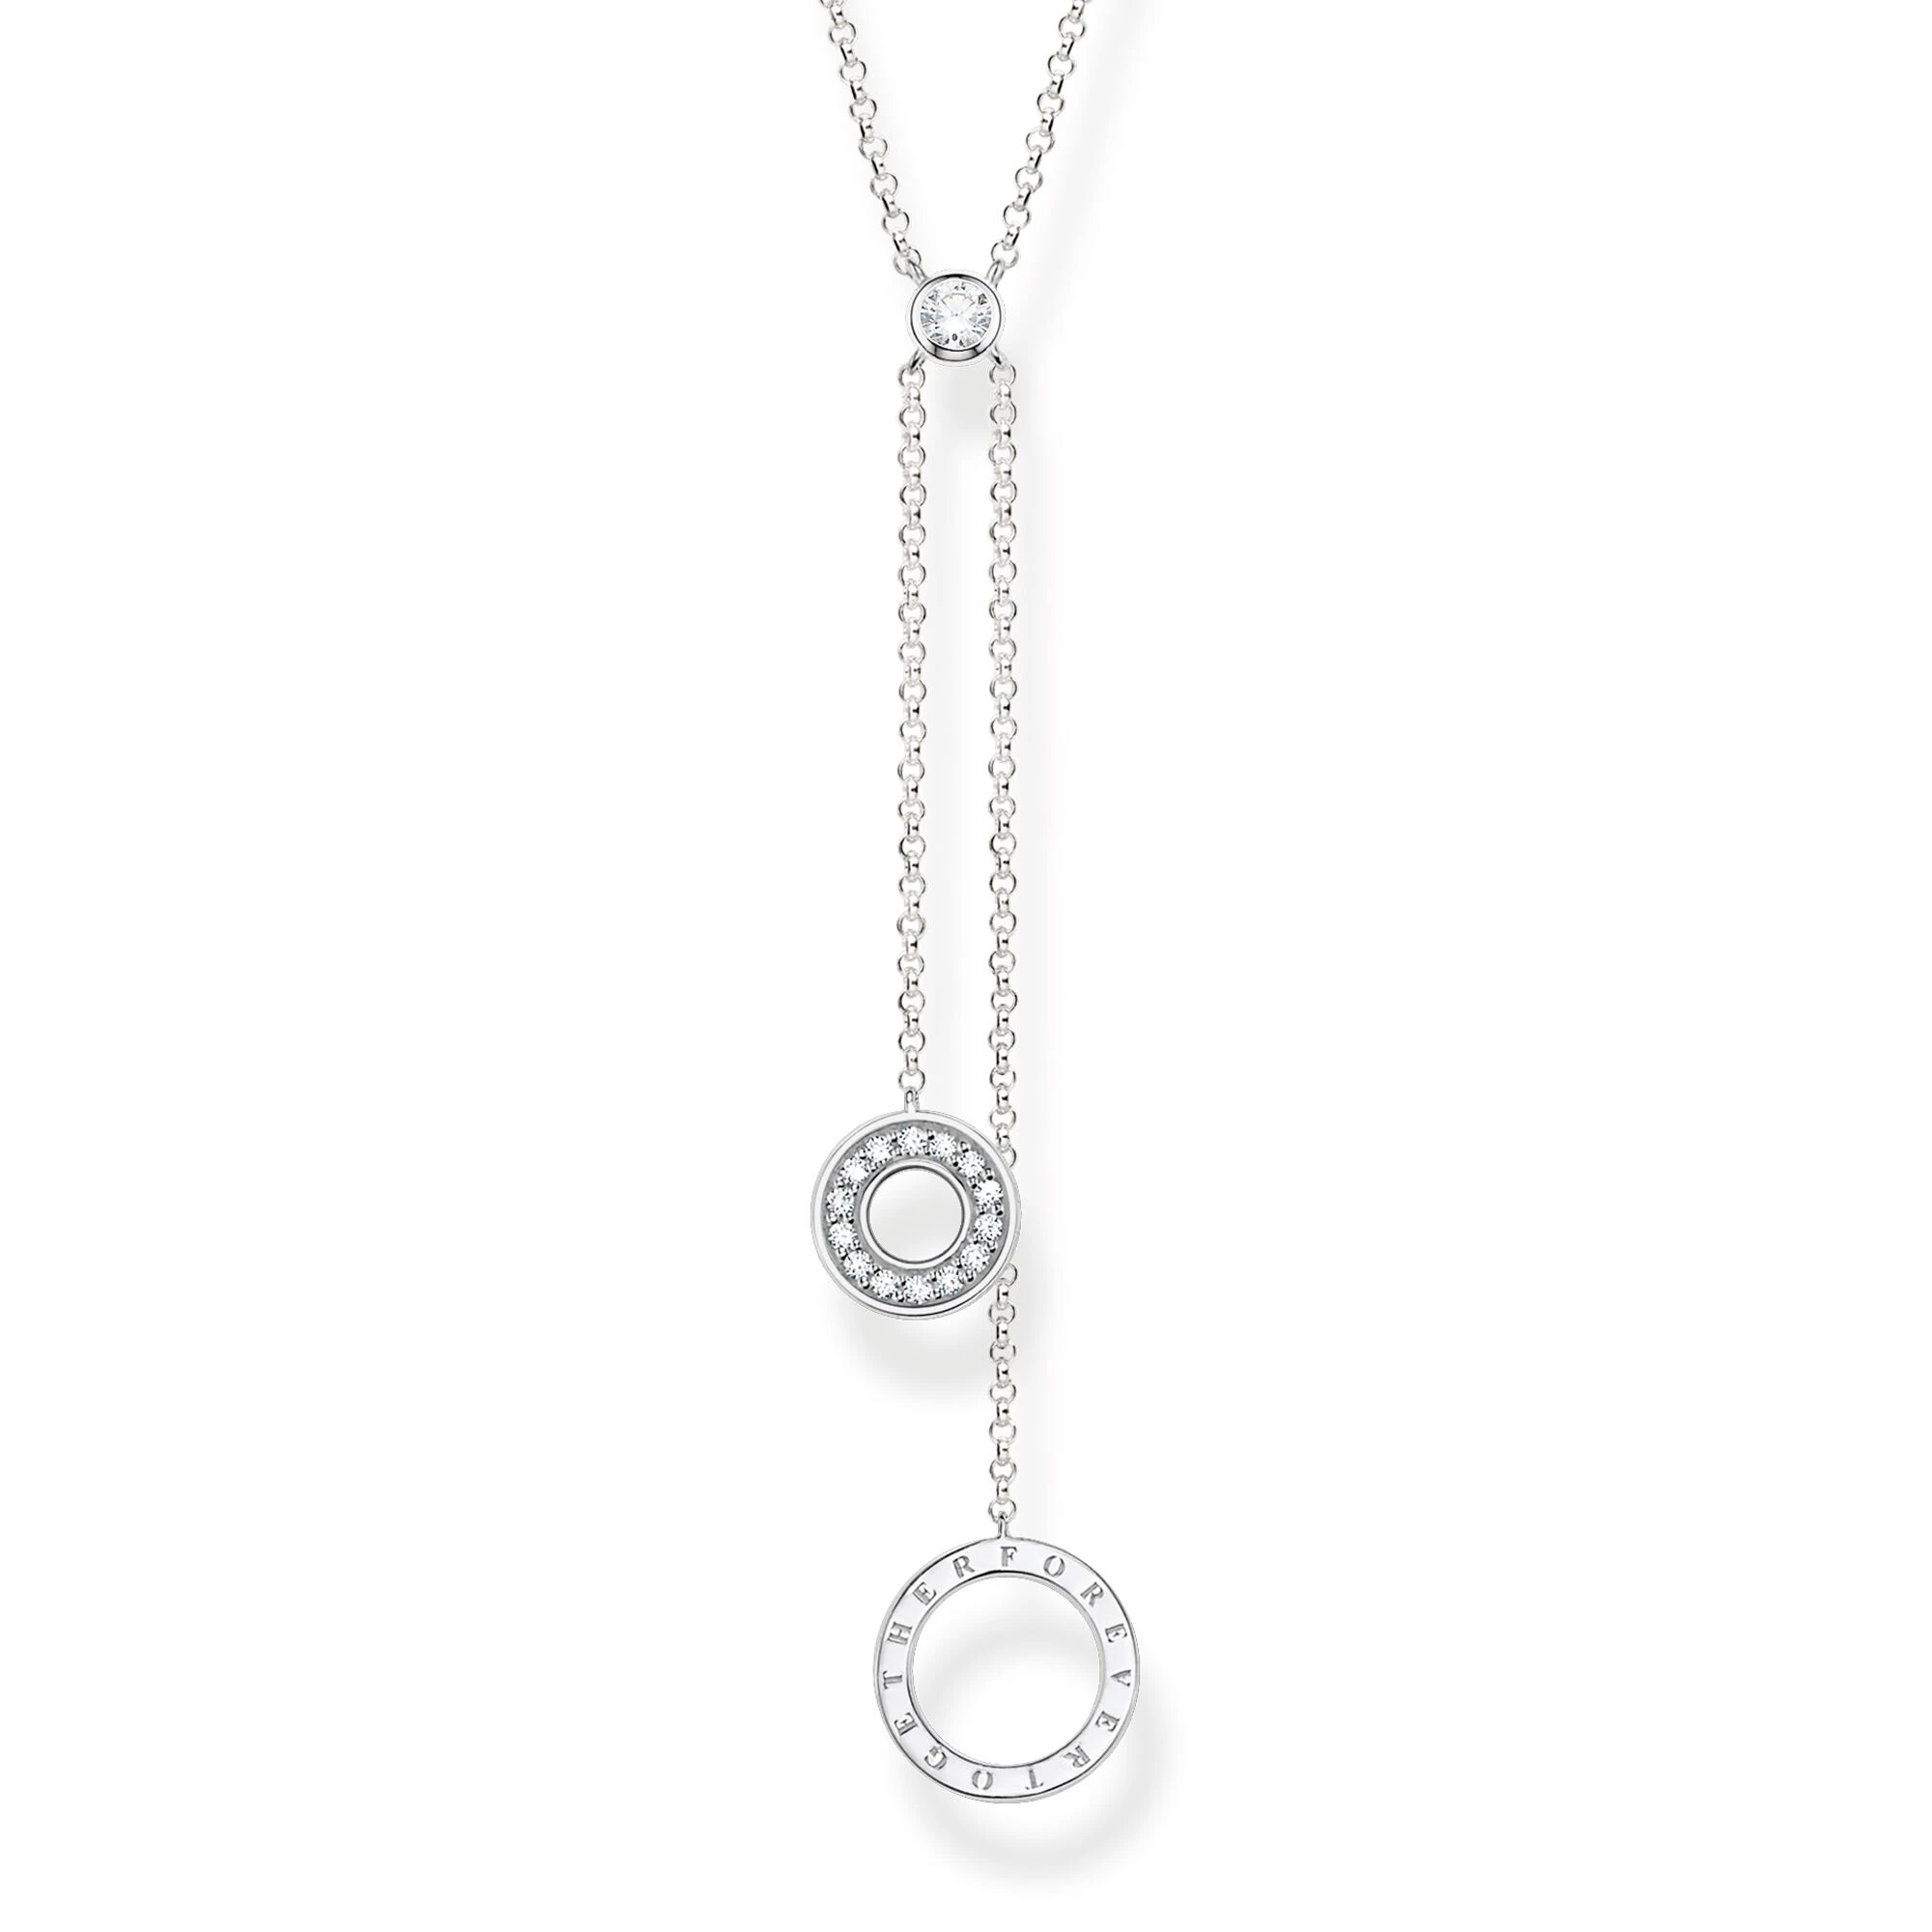 Sterling Silver Drop Muince soláthróir saincheaptha OEM/ODM Jewelry